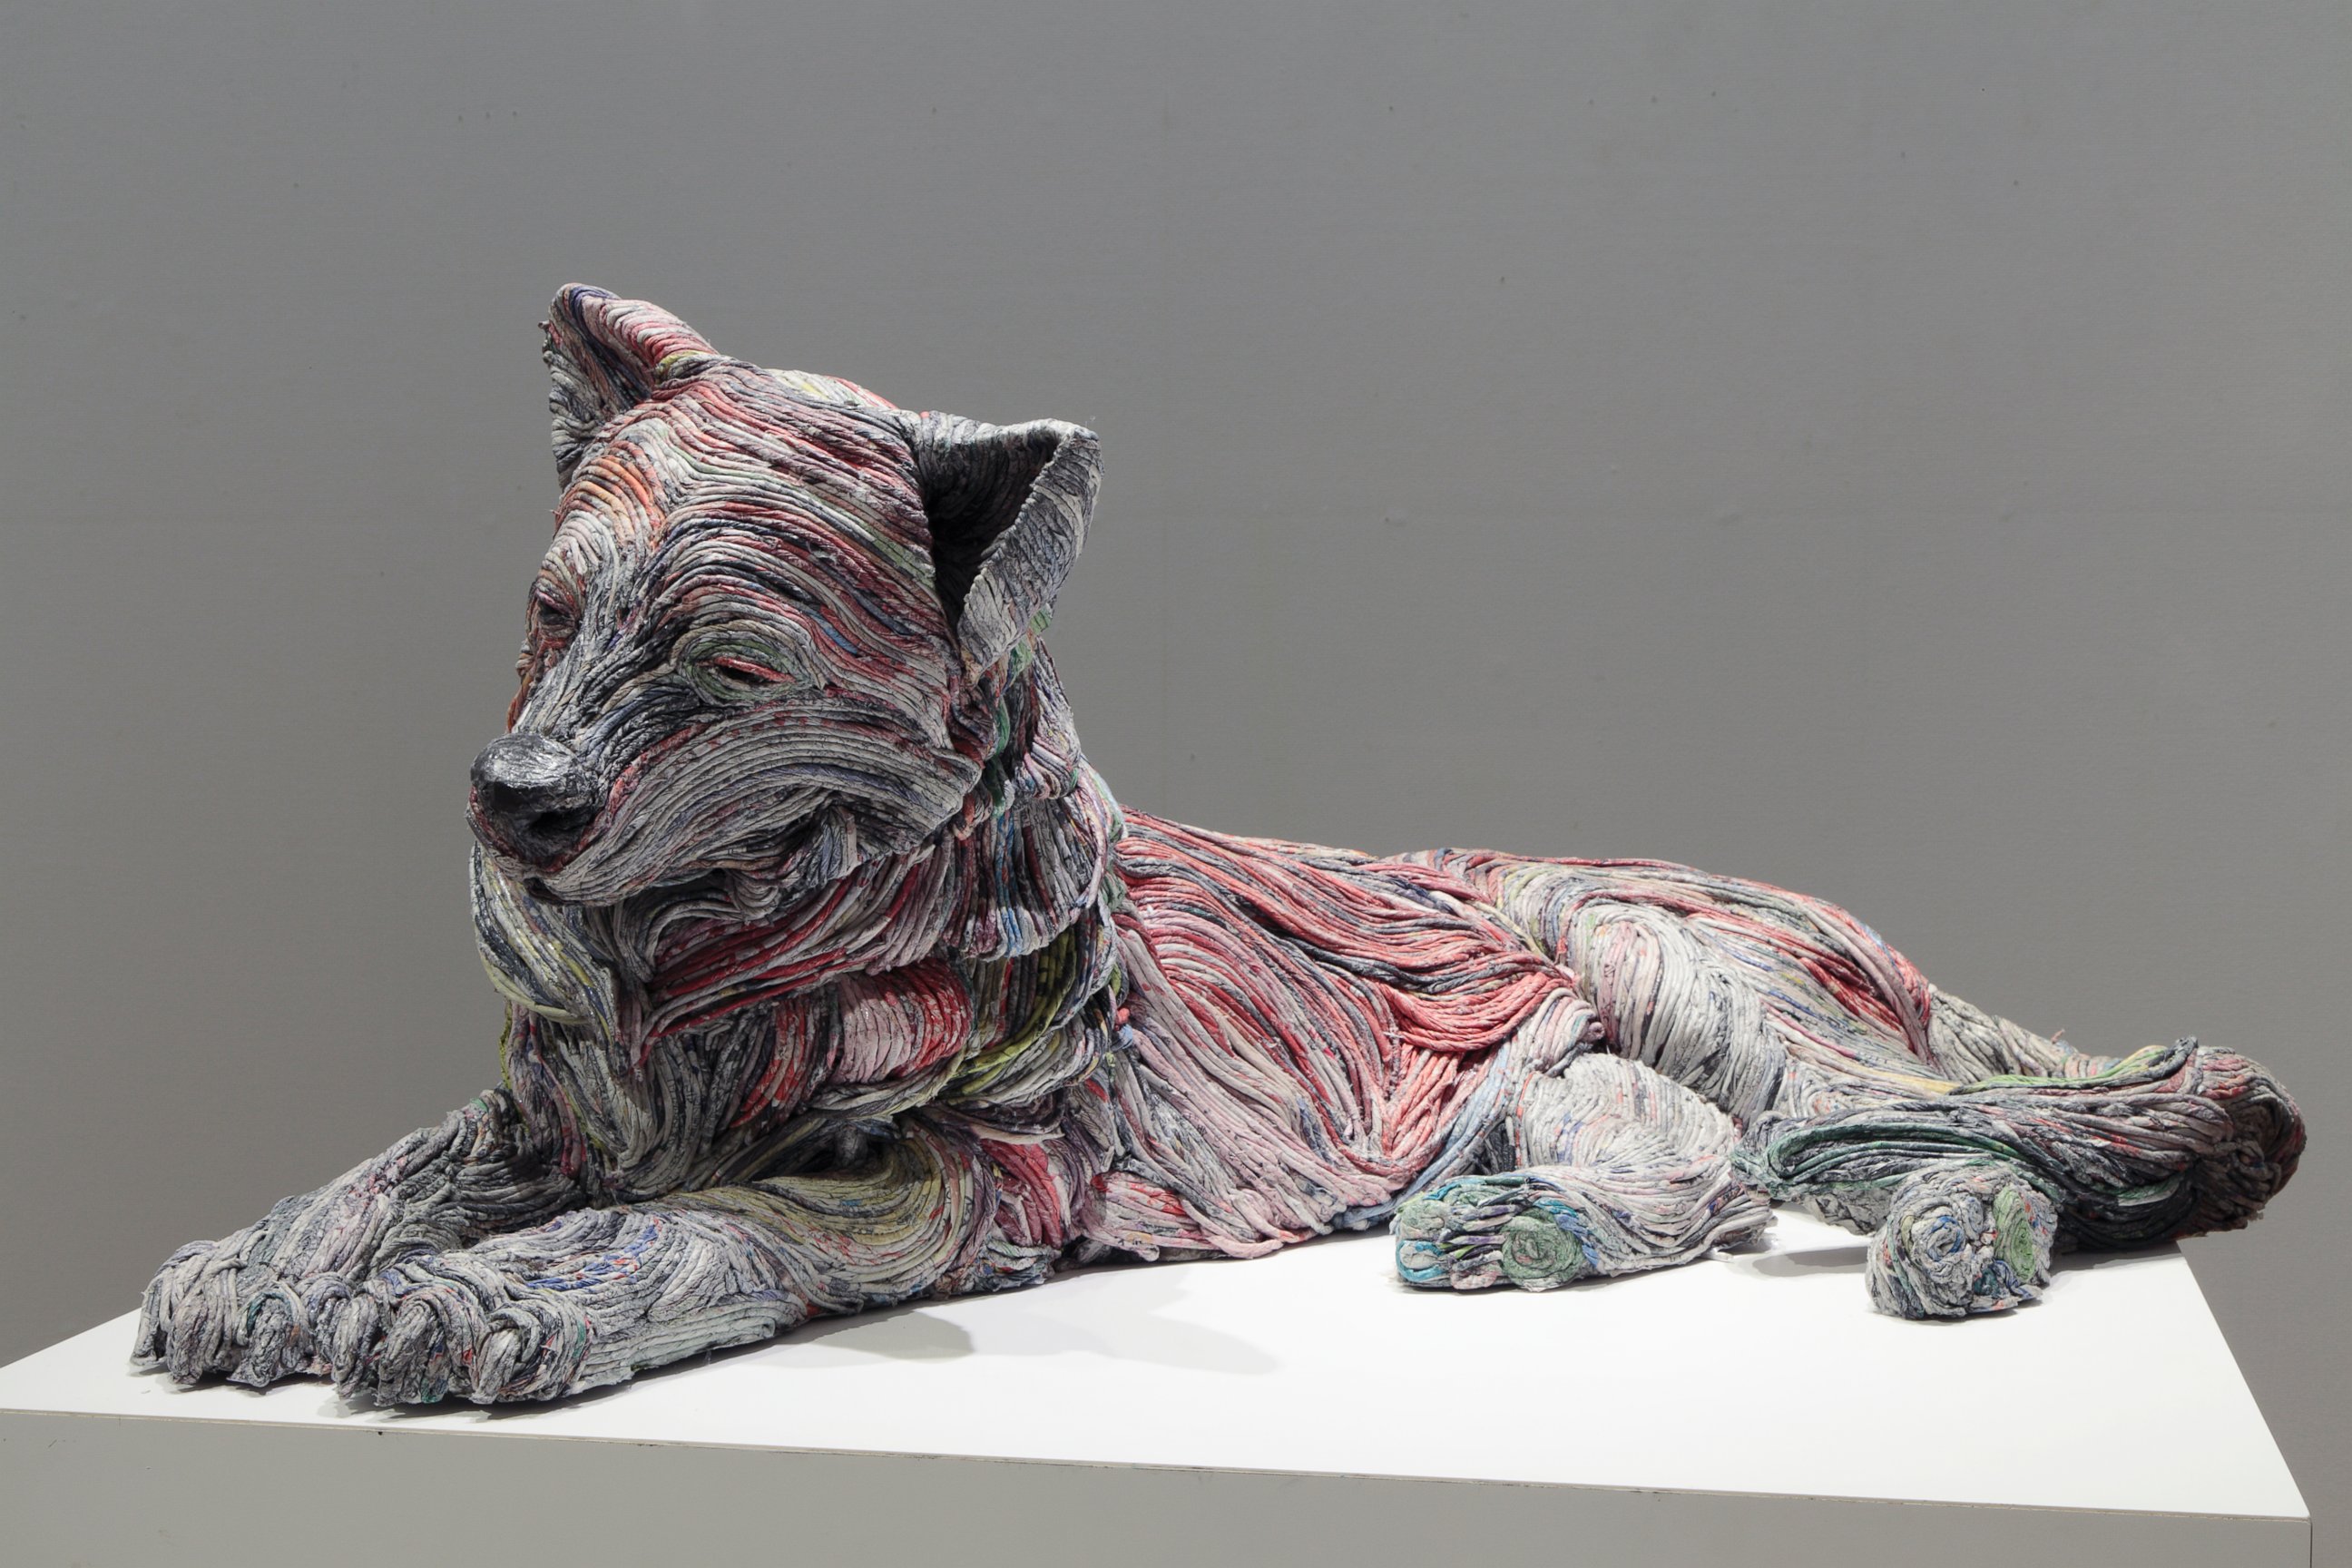 PHOTO: The "Kami no komoriuta: red wolf, 2013," sculpture is seen here.